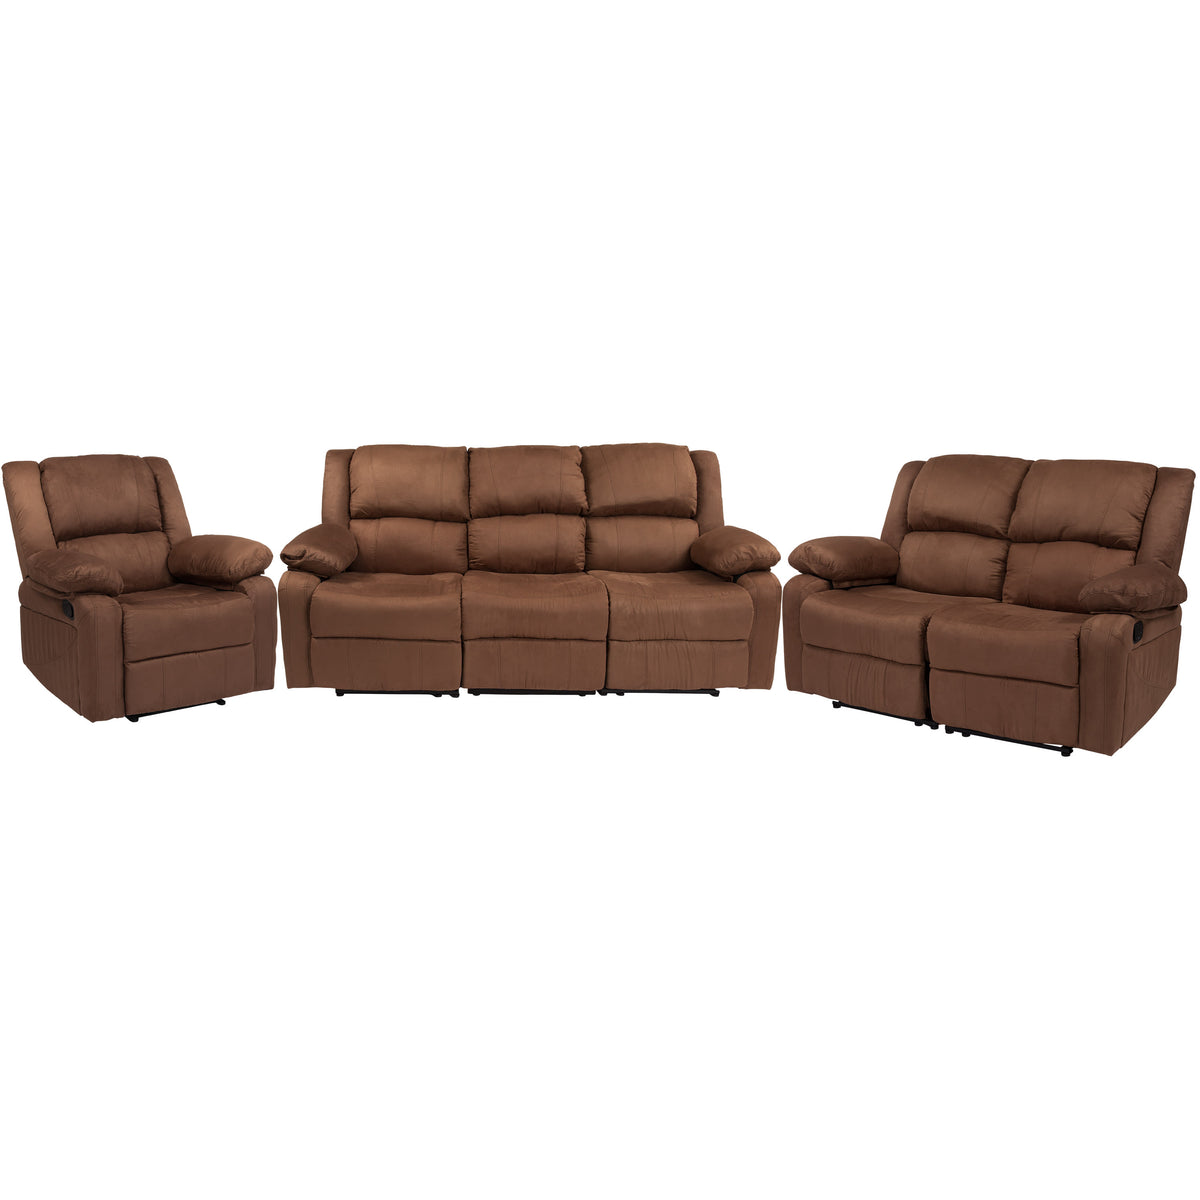 Chocolate Brown Microfiber |#| Contemporary Chocolate Brown Microfiber Plush Pillow Back Reclining Sofa Set